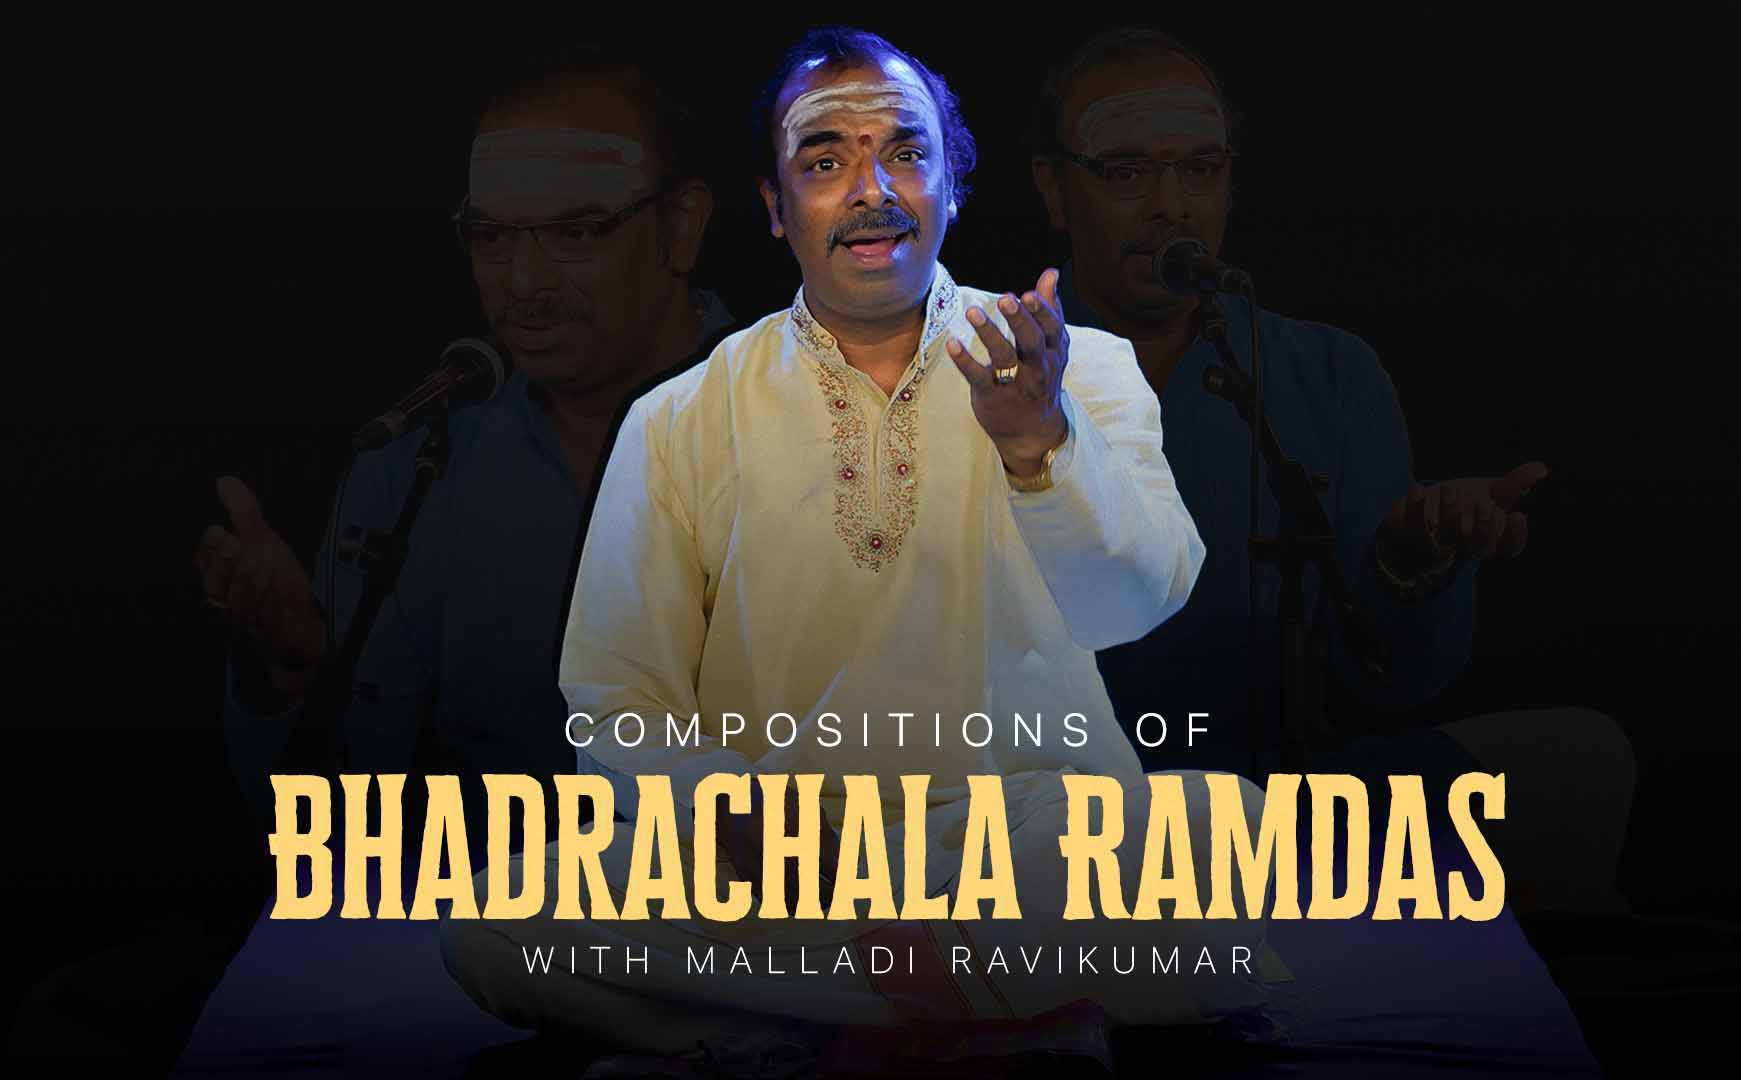 Compositions of Sri Bhadrachalam Ramdasu